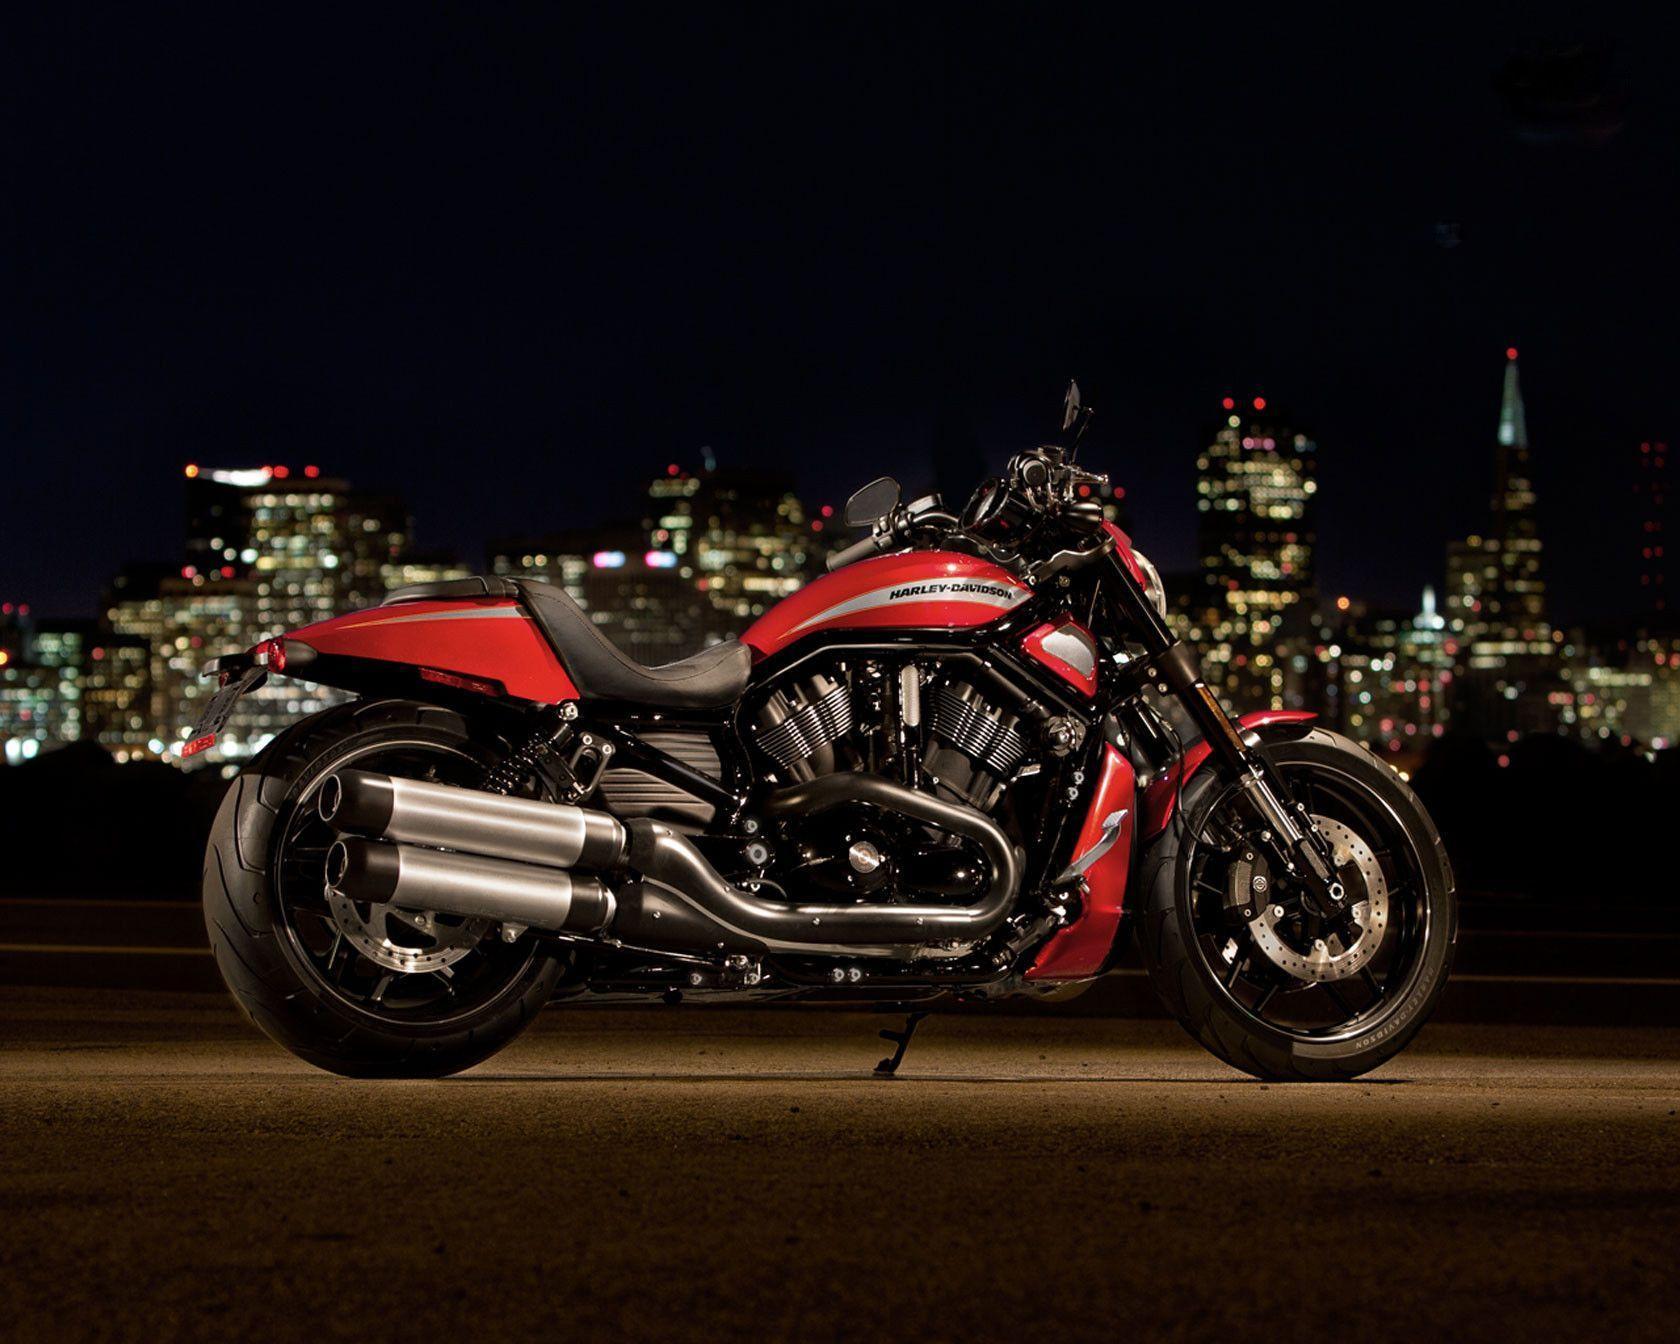 Harley Davidson 2013 NightRodSpecial widescreen wallpaper. Fine